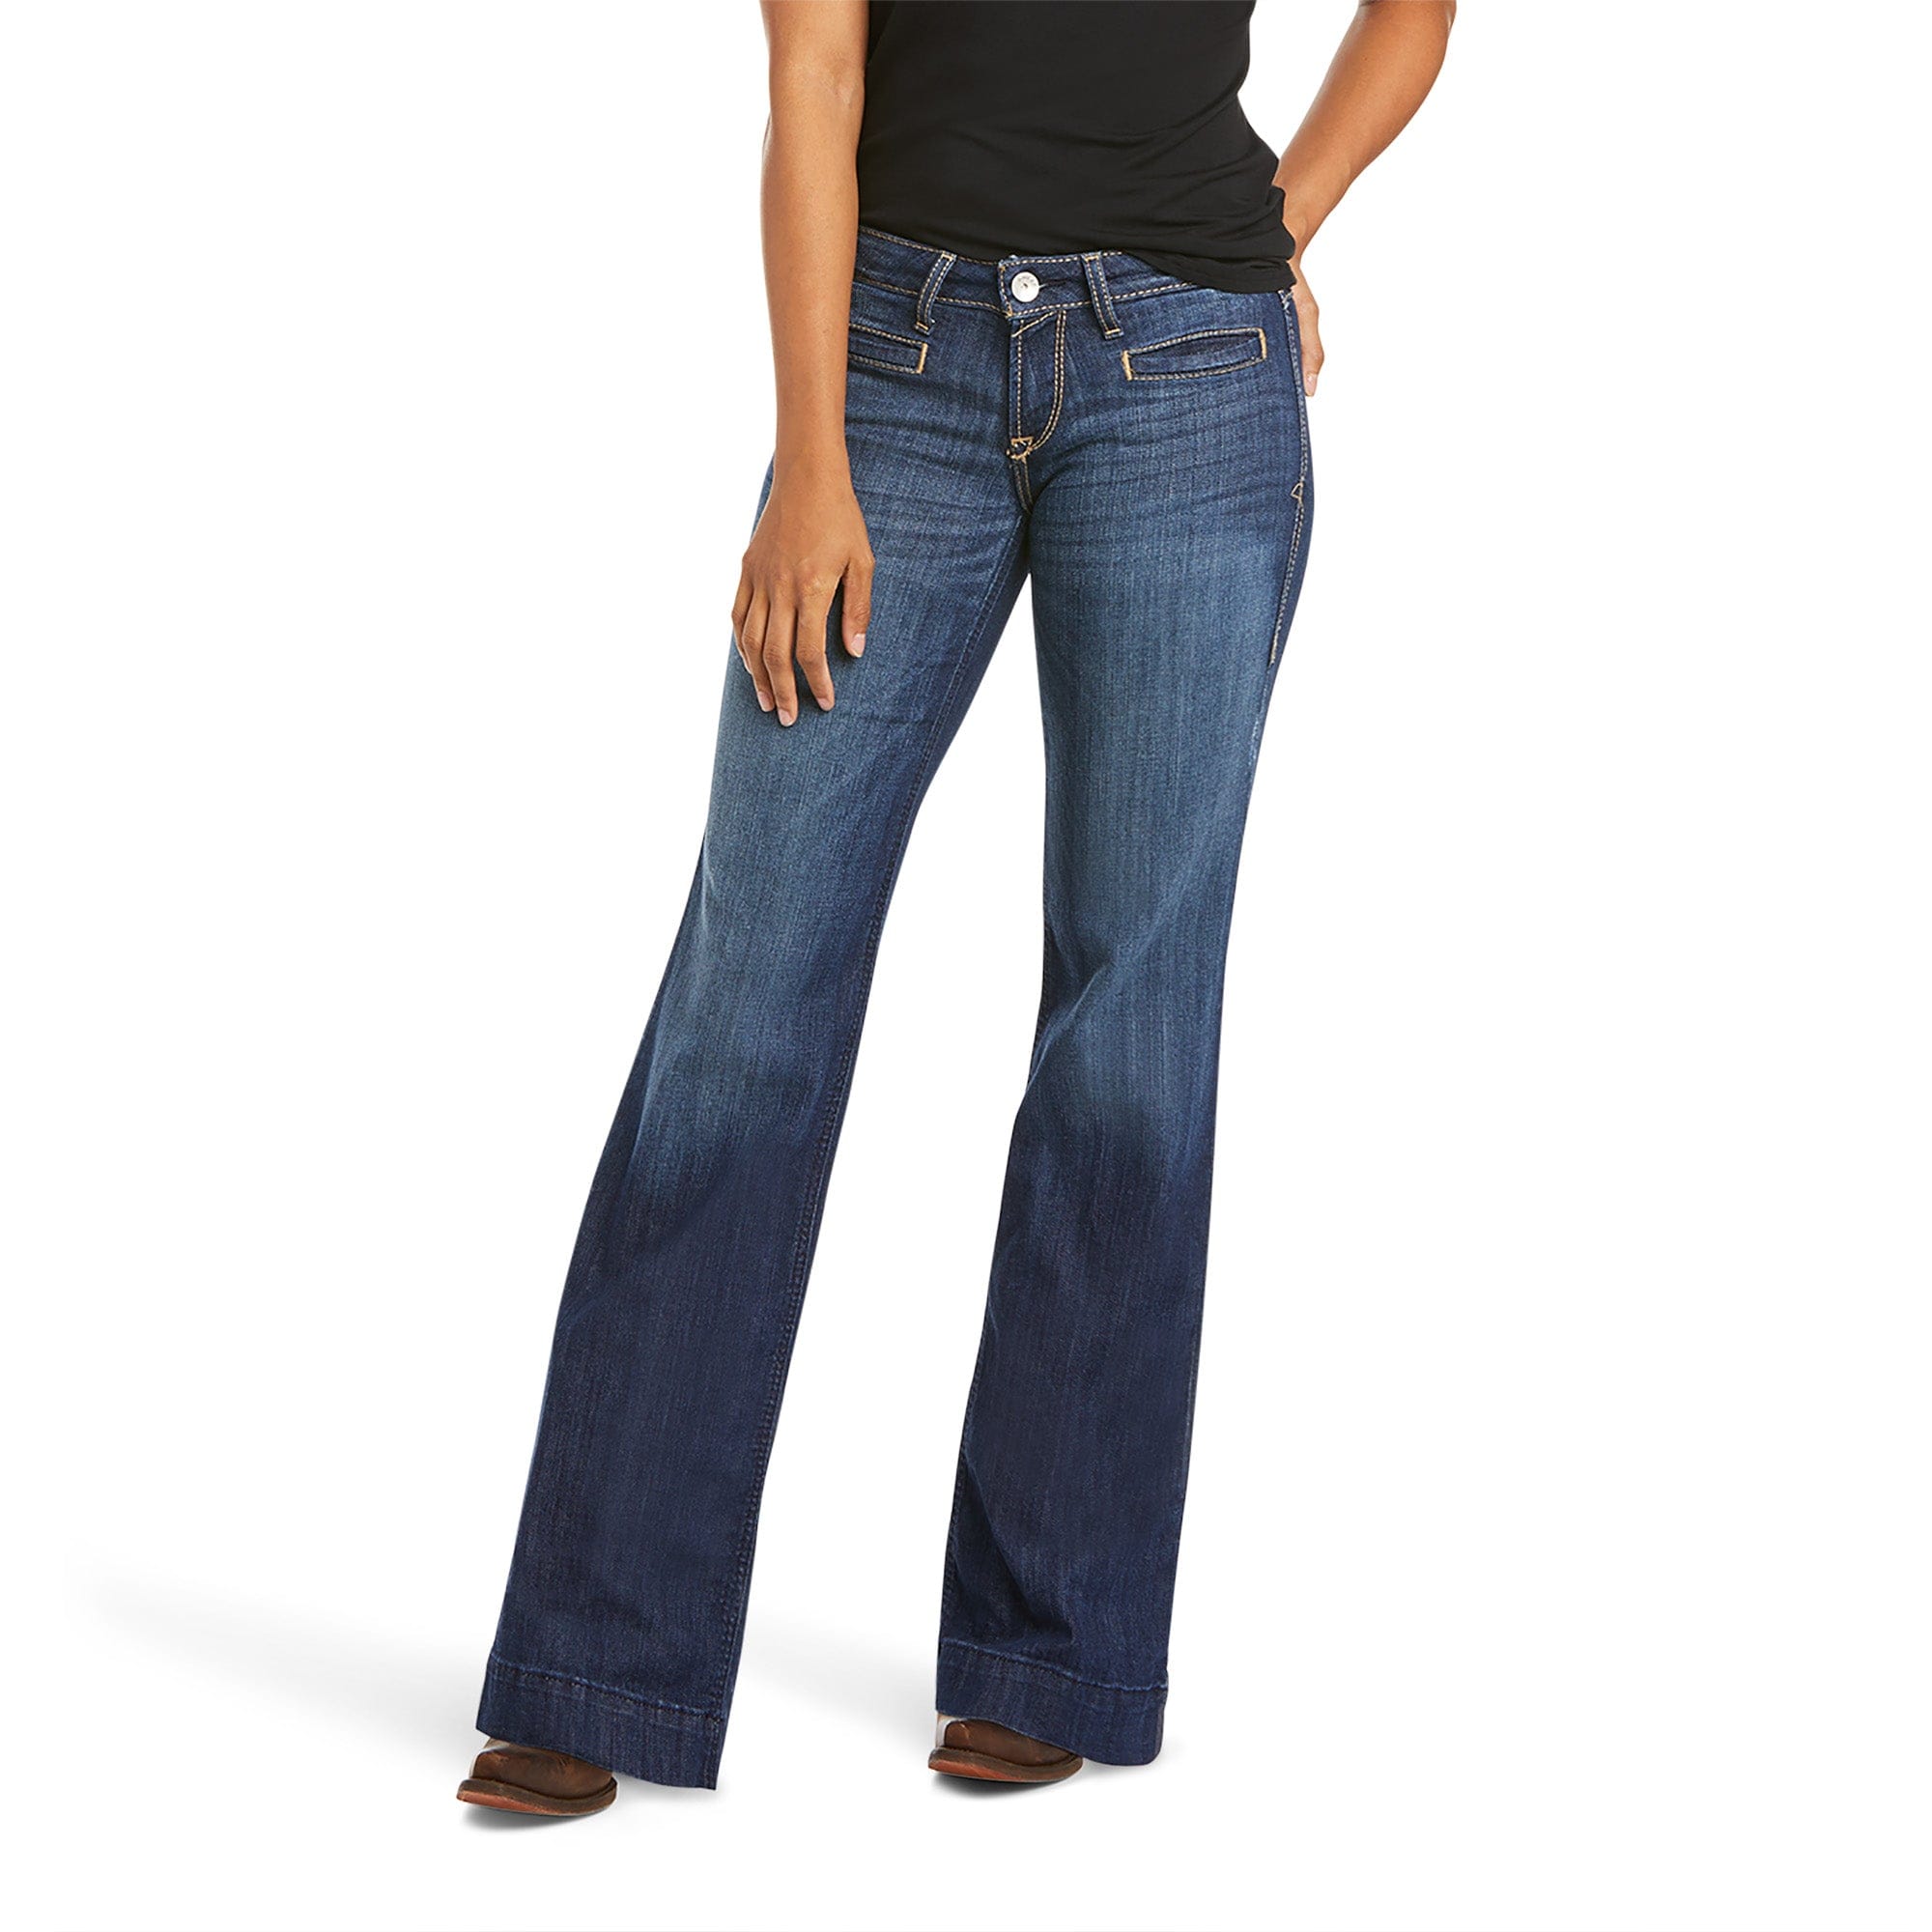 Ariat Women's Lucy Pacific Trouser Denim Jeans, 32 R